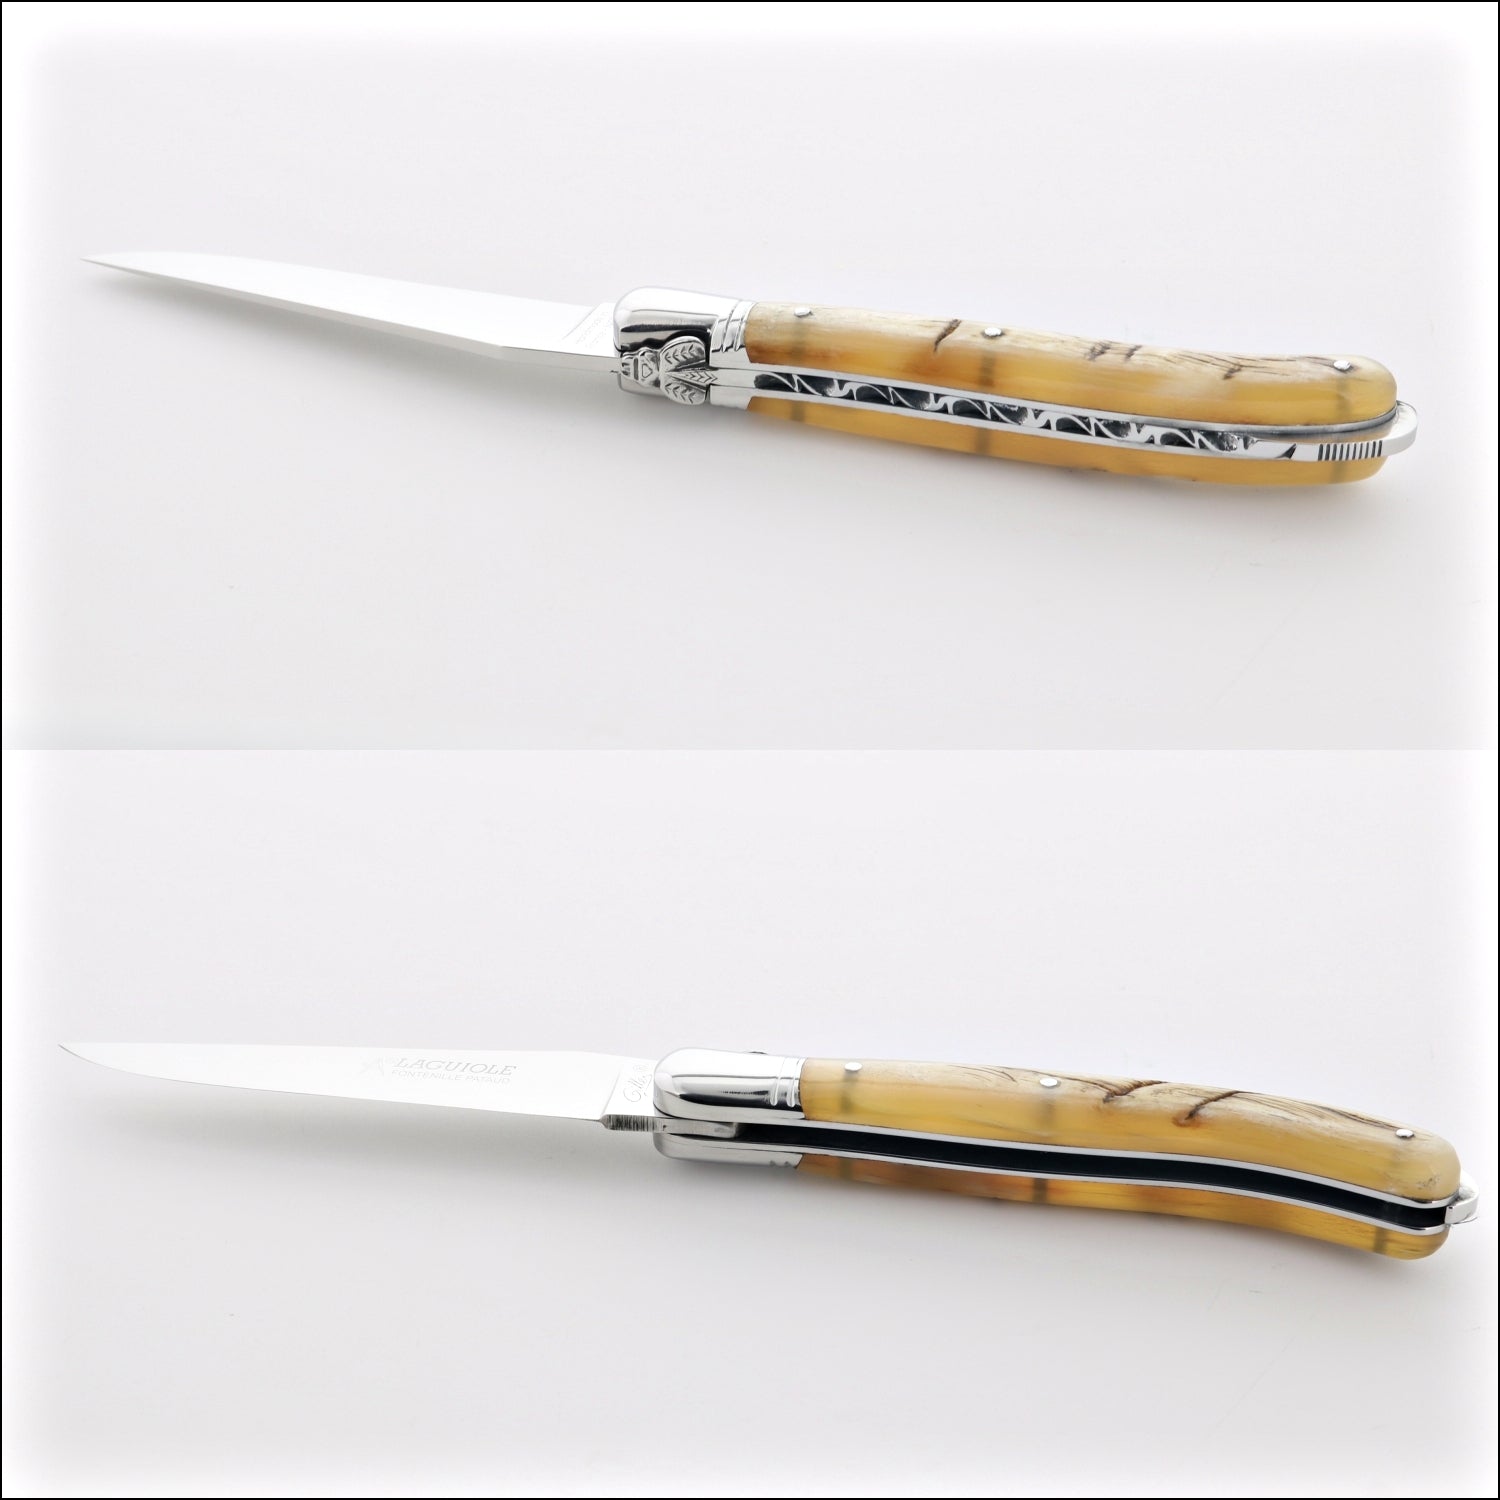 Steak knife “Angus” in stainless steel – LEGNOART